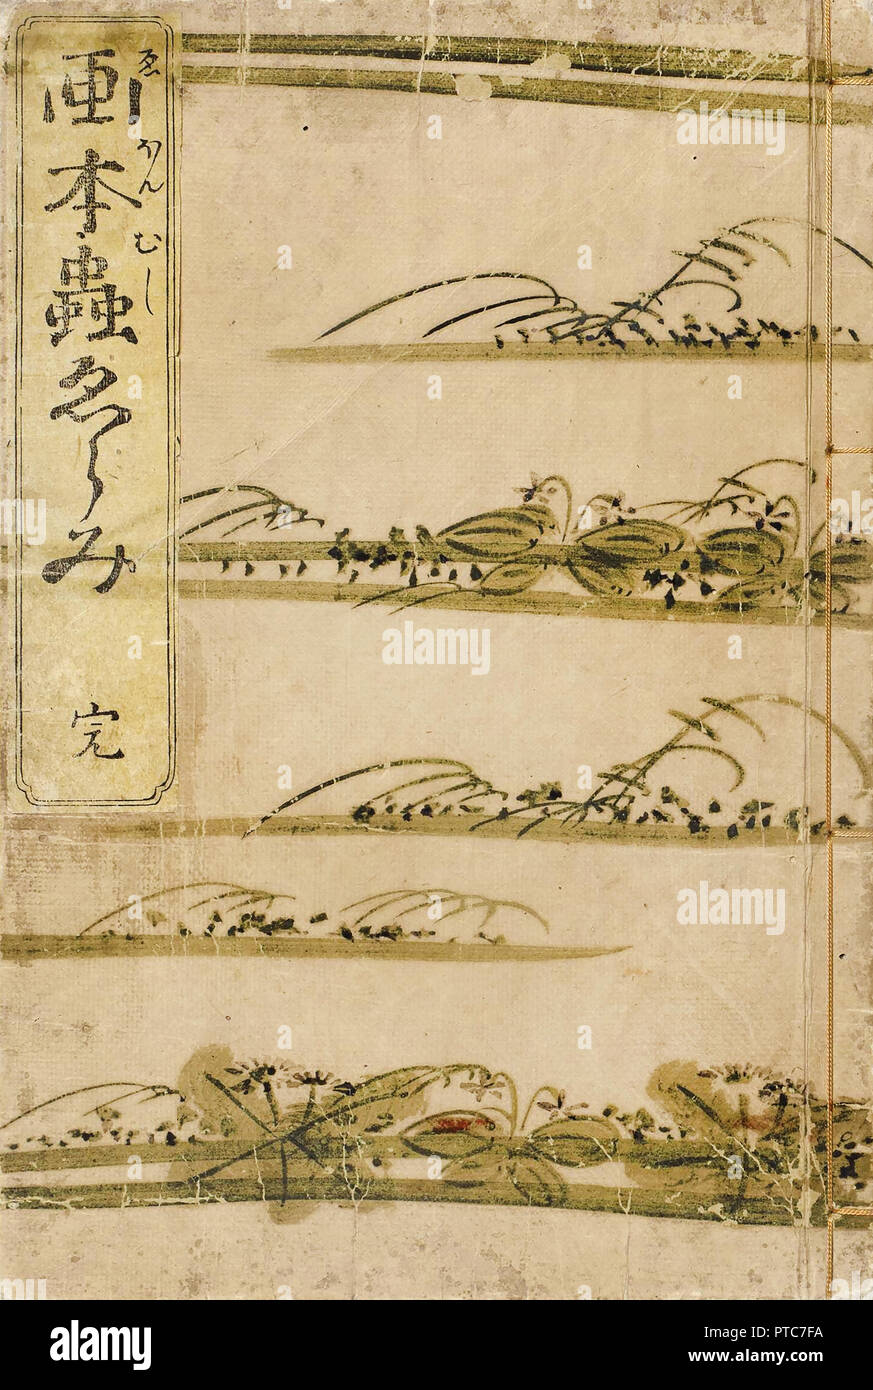 Kitagawa Utamaro, Ehon Mushi Erami 1788 Woodblock prints on paper, Museum of Fine Arts, Houston, USA. Stock Photo